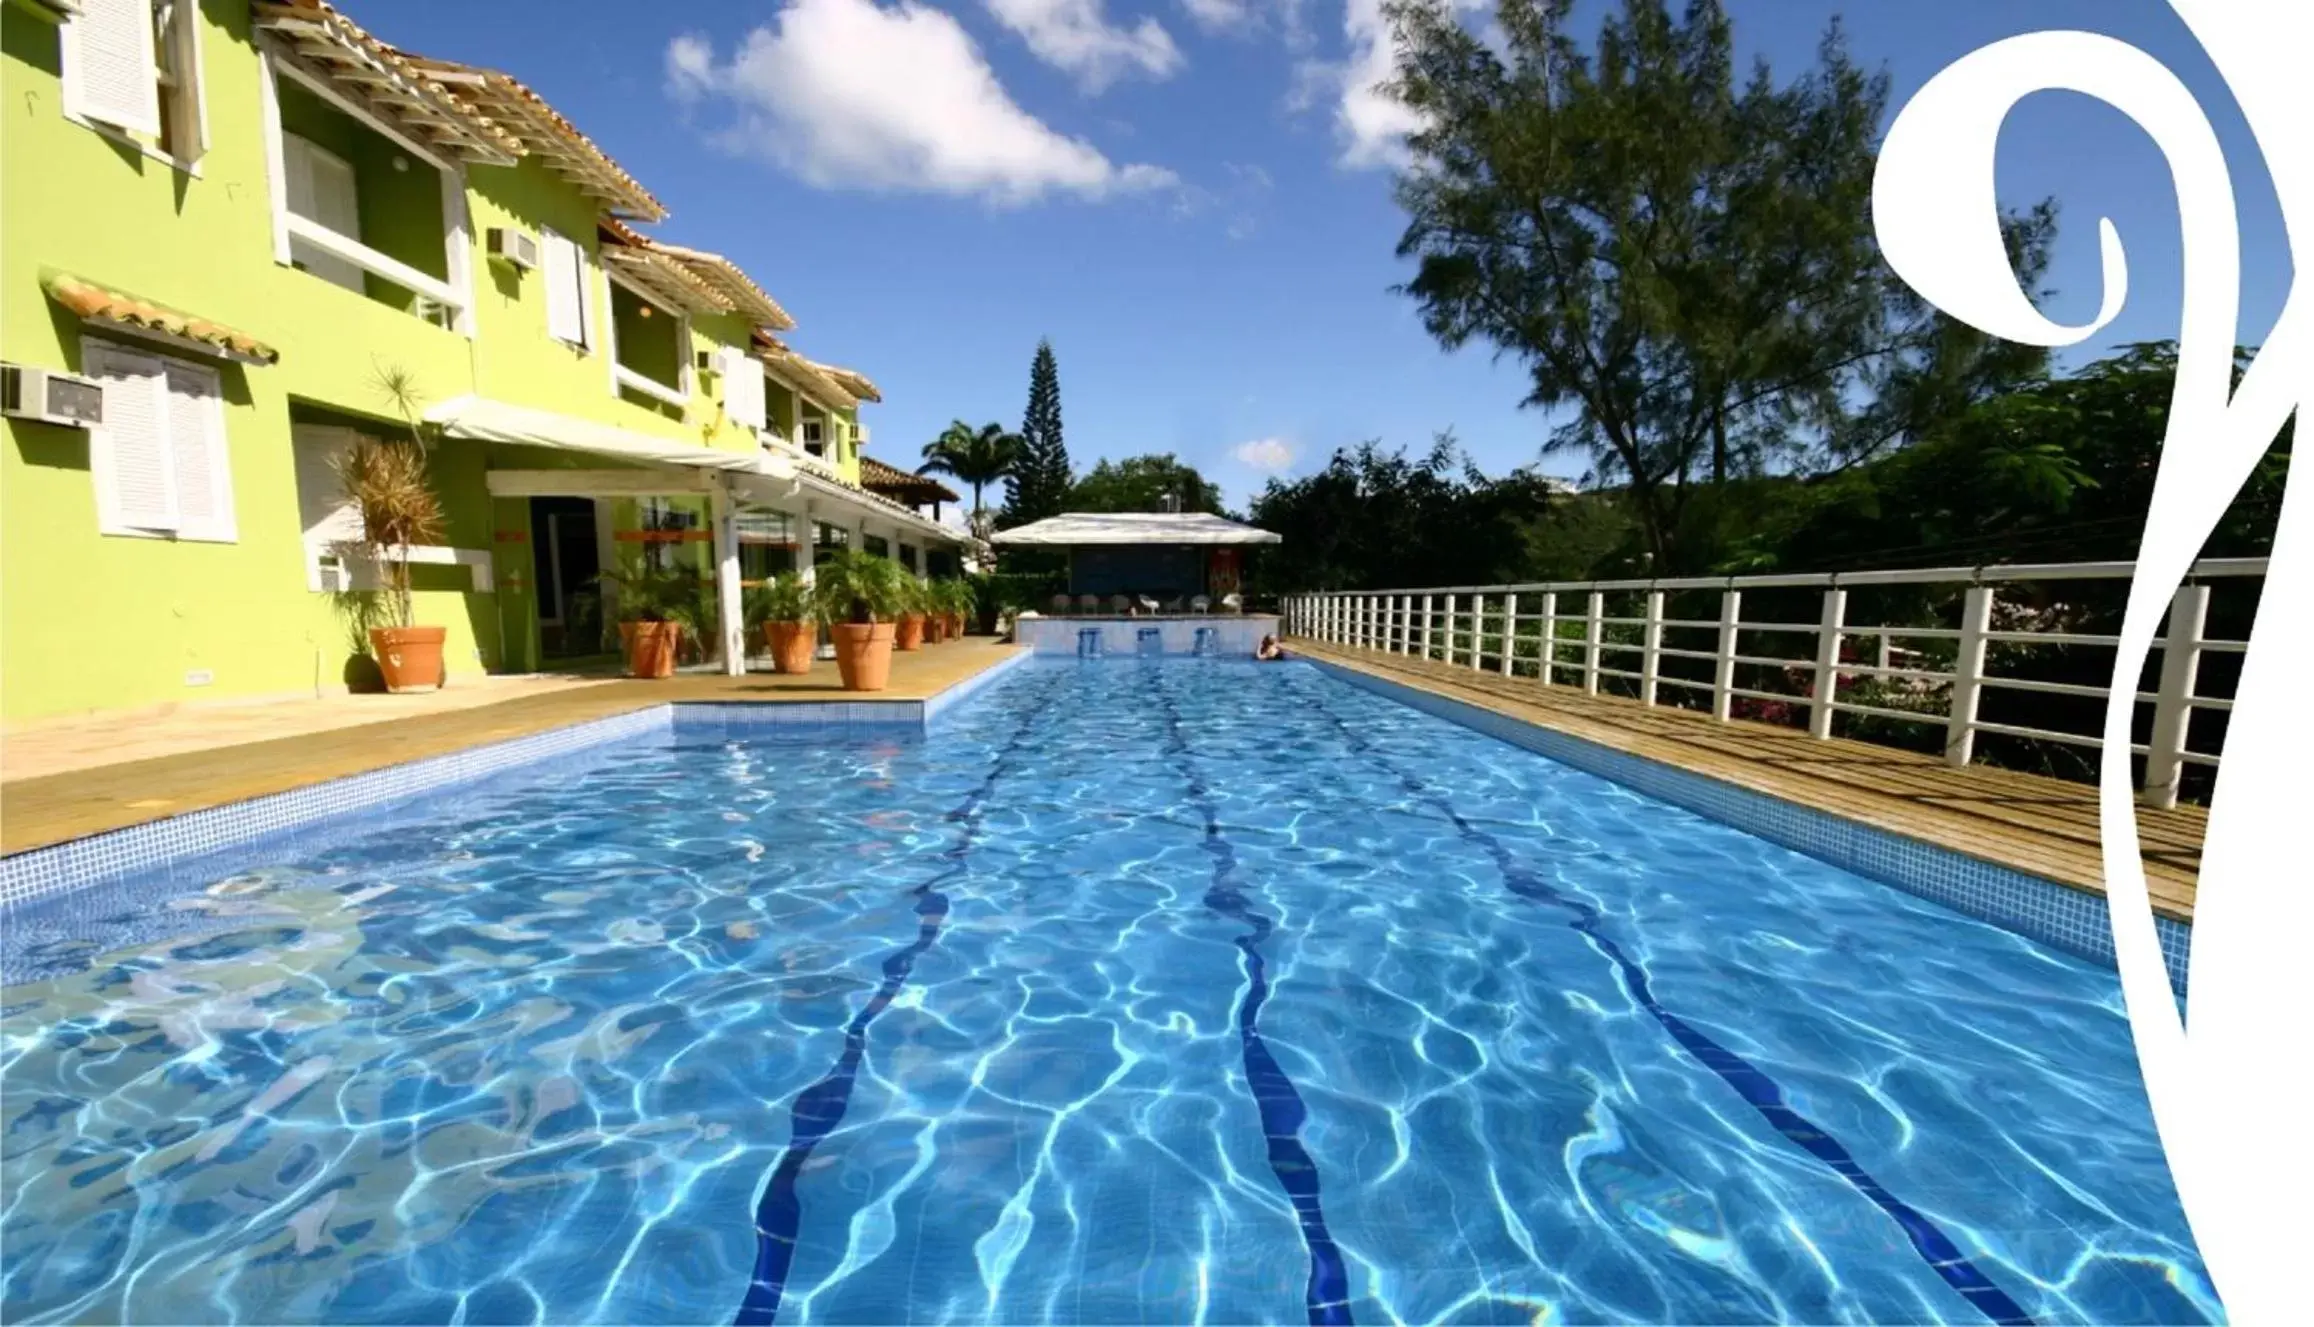 Swimming Pool in Pousada dos Reis